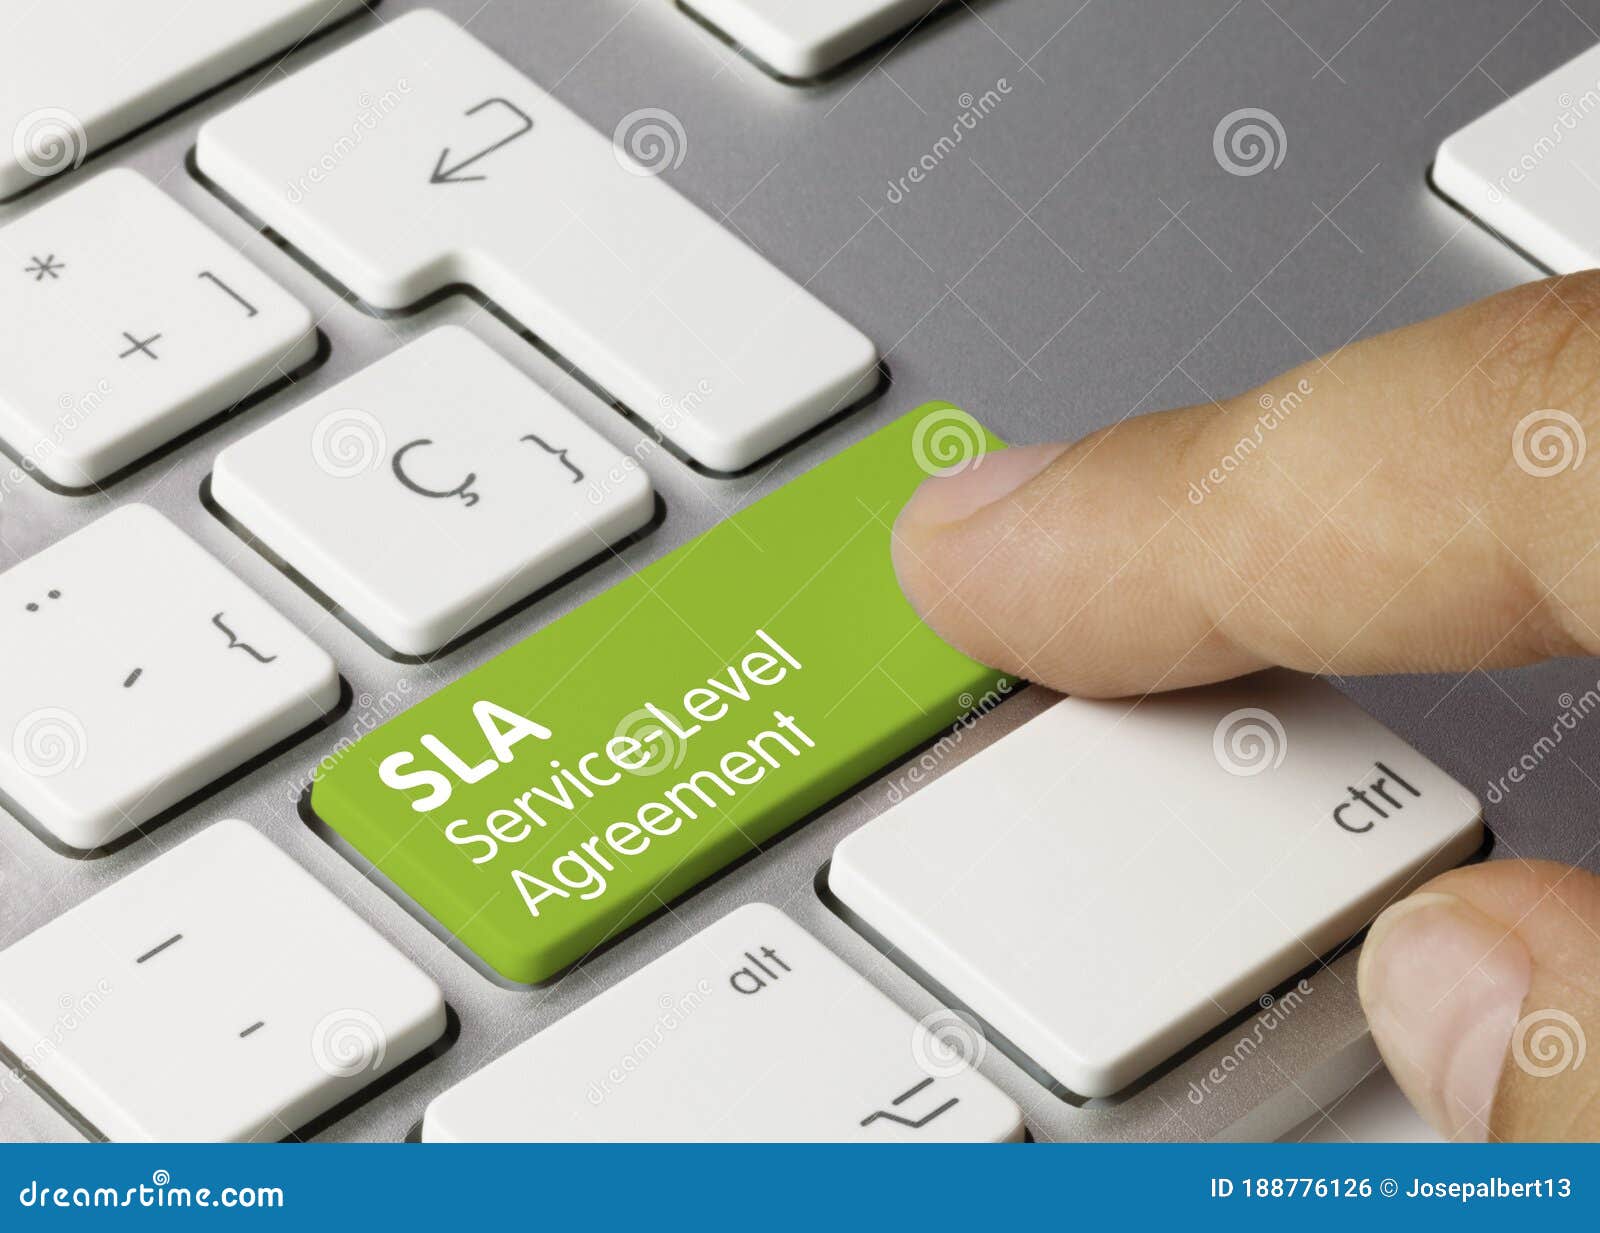 sla service-level agreement - inscription on green keyboard key